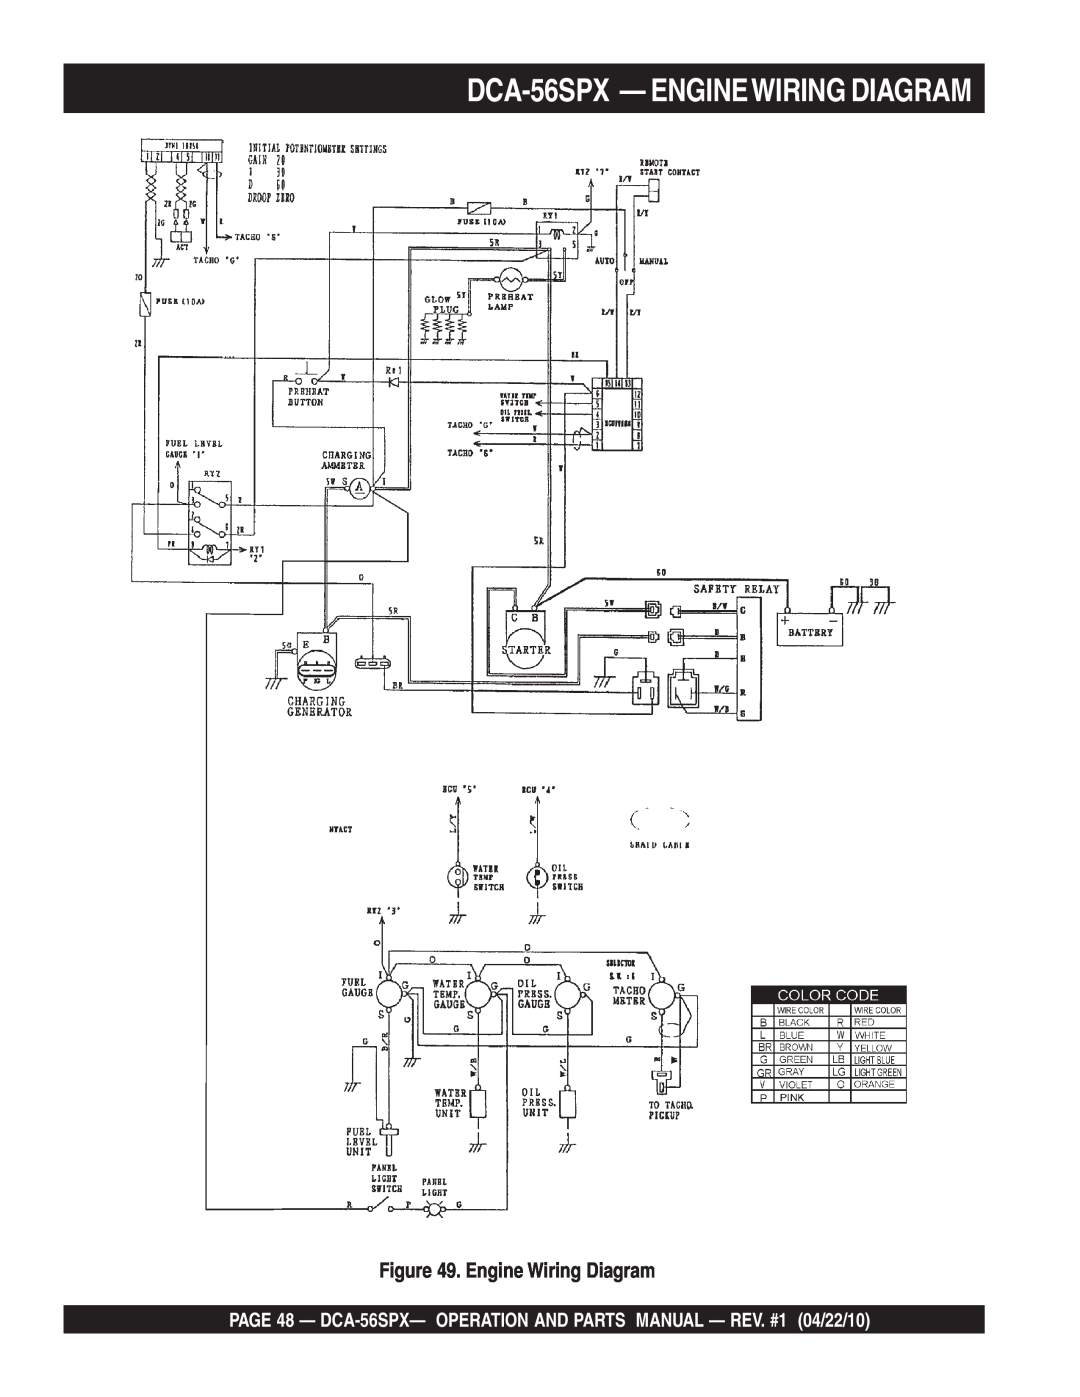 Multiquip operation manual DCA-56SPX- ENGINEWIRING DIAGRAM, Engine Wiring Diagram 